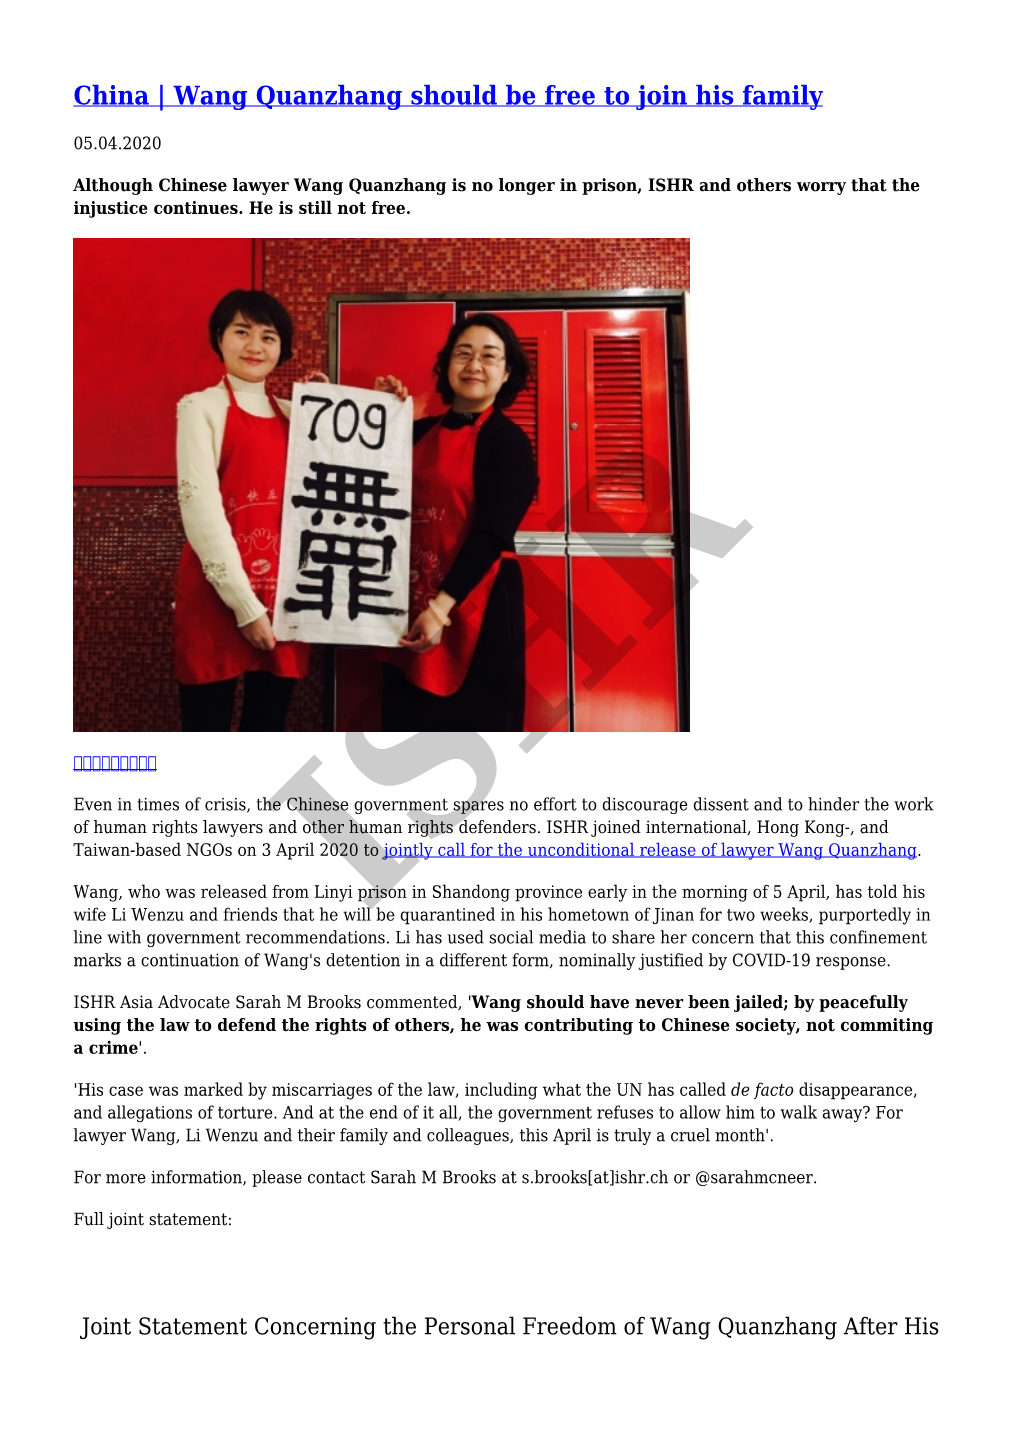 China | Wang Quanzhang Should Be Free to Join His Family